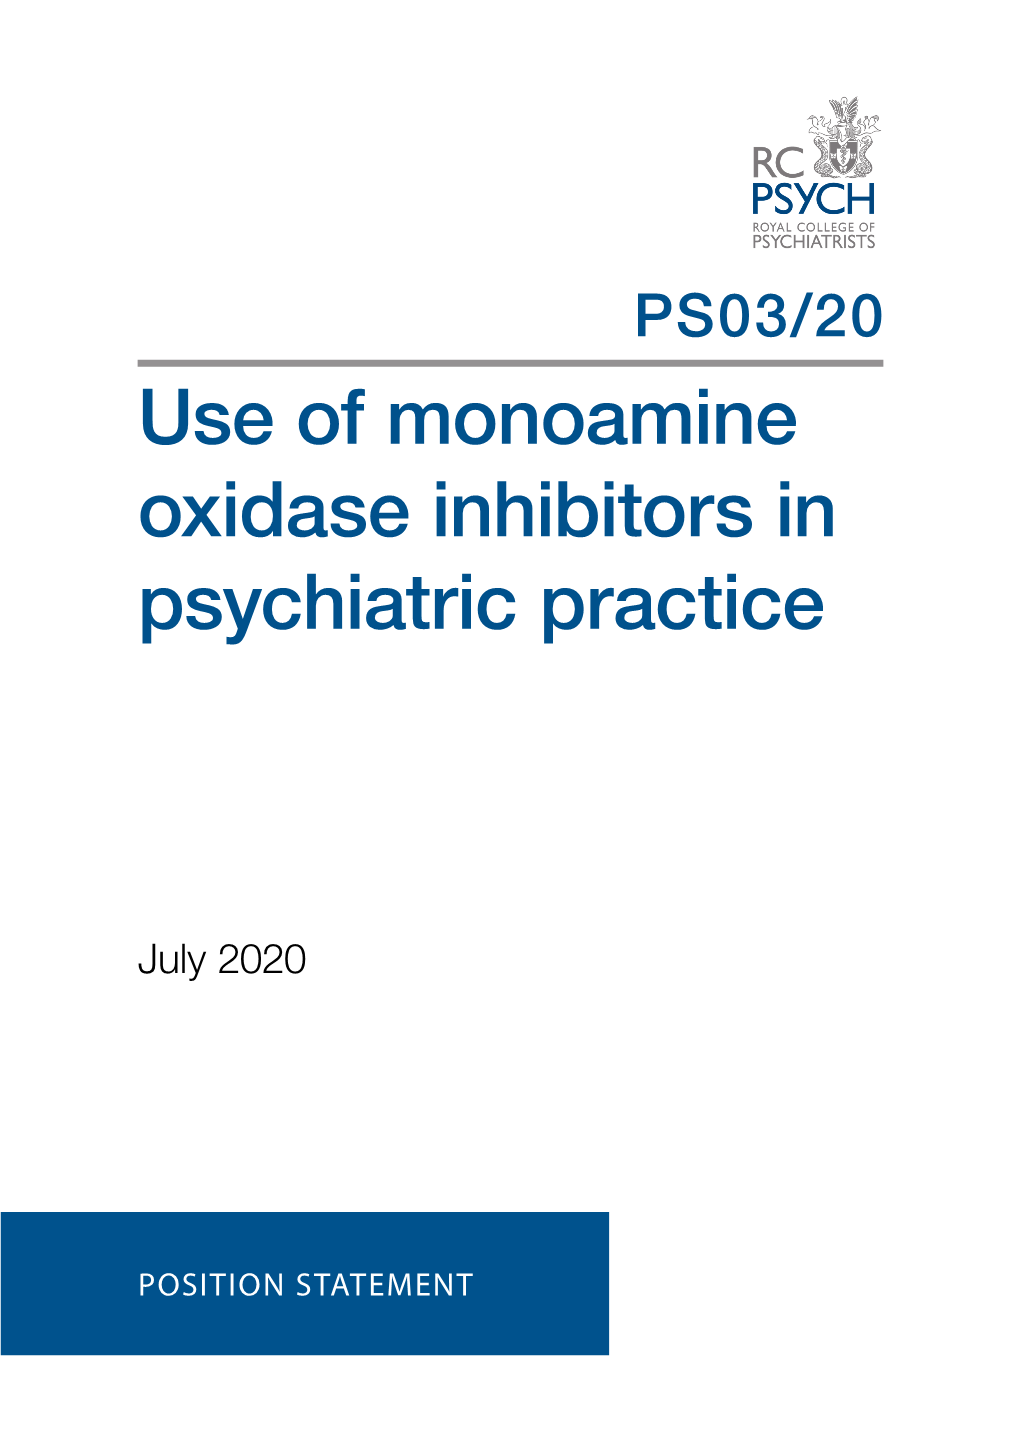 Use of Monoamine Oxidase Inhibitors in Psychiatric Practice